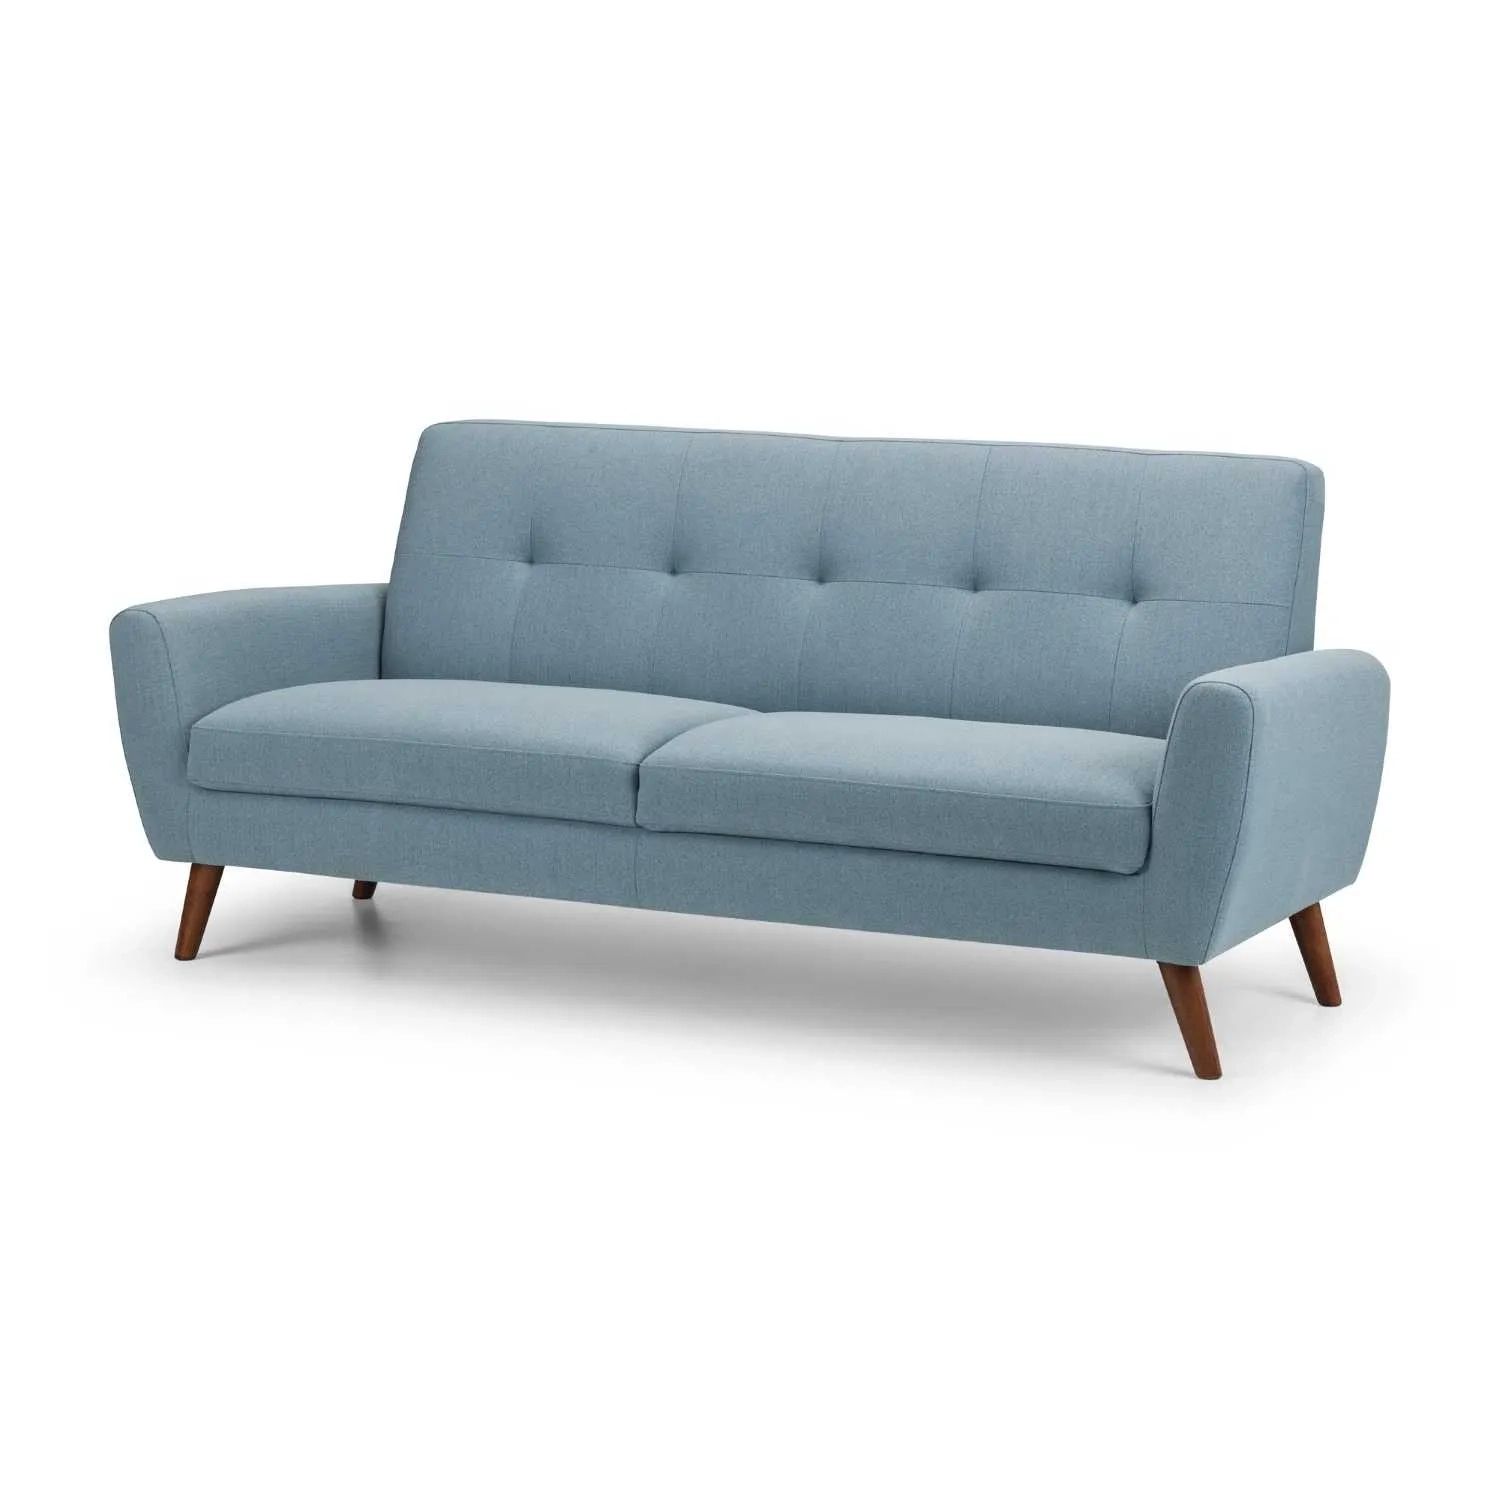 Light Blue Linen Fabric Upholstered 3 Seater Compact Retro Scandinavian Sofa  – Amc Extra Throughout Modern Blue Linen Sofas (View 12 of 15)